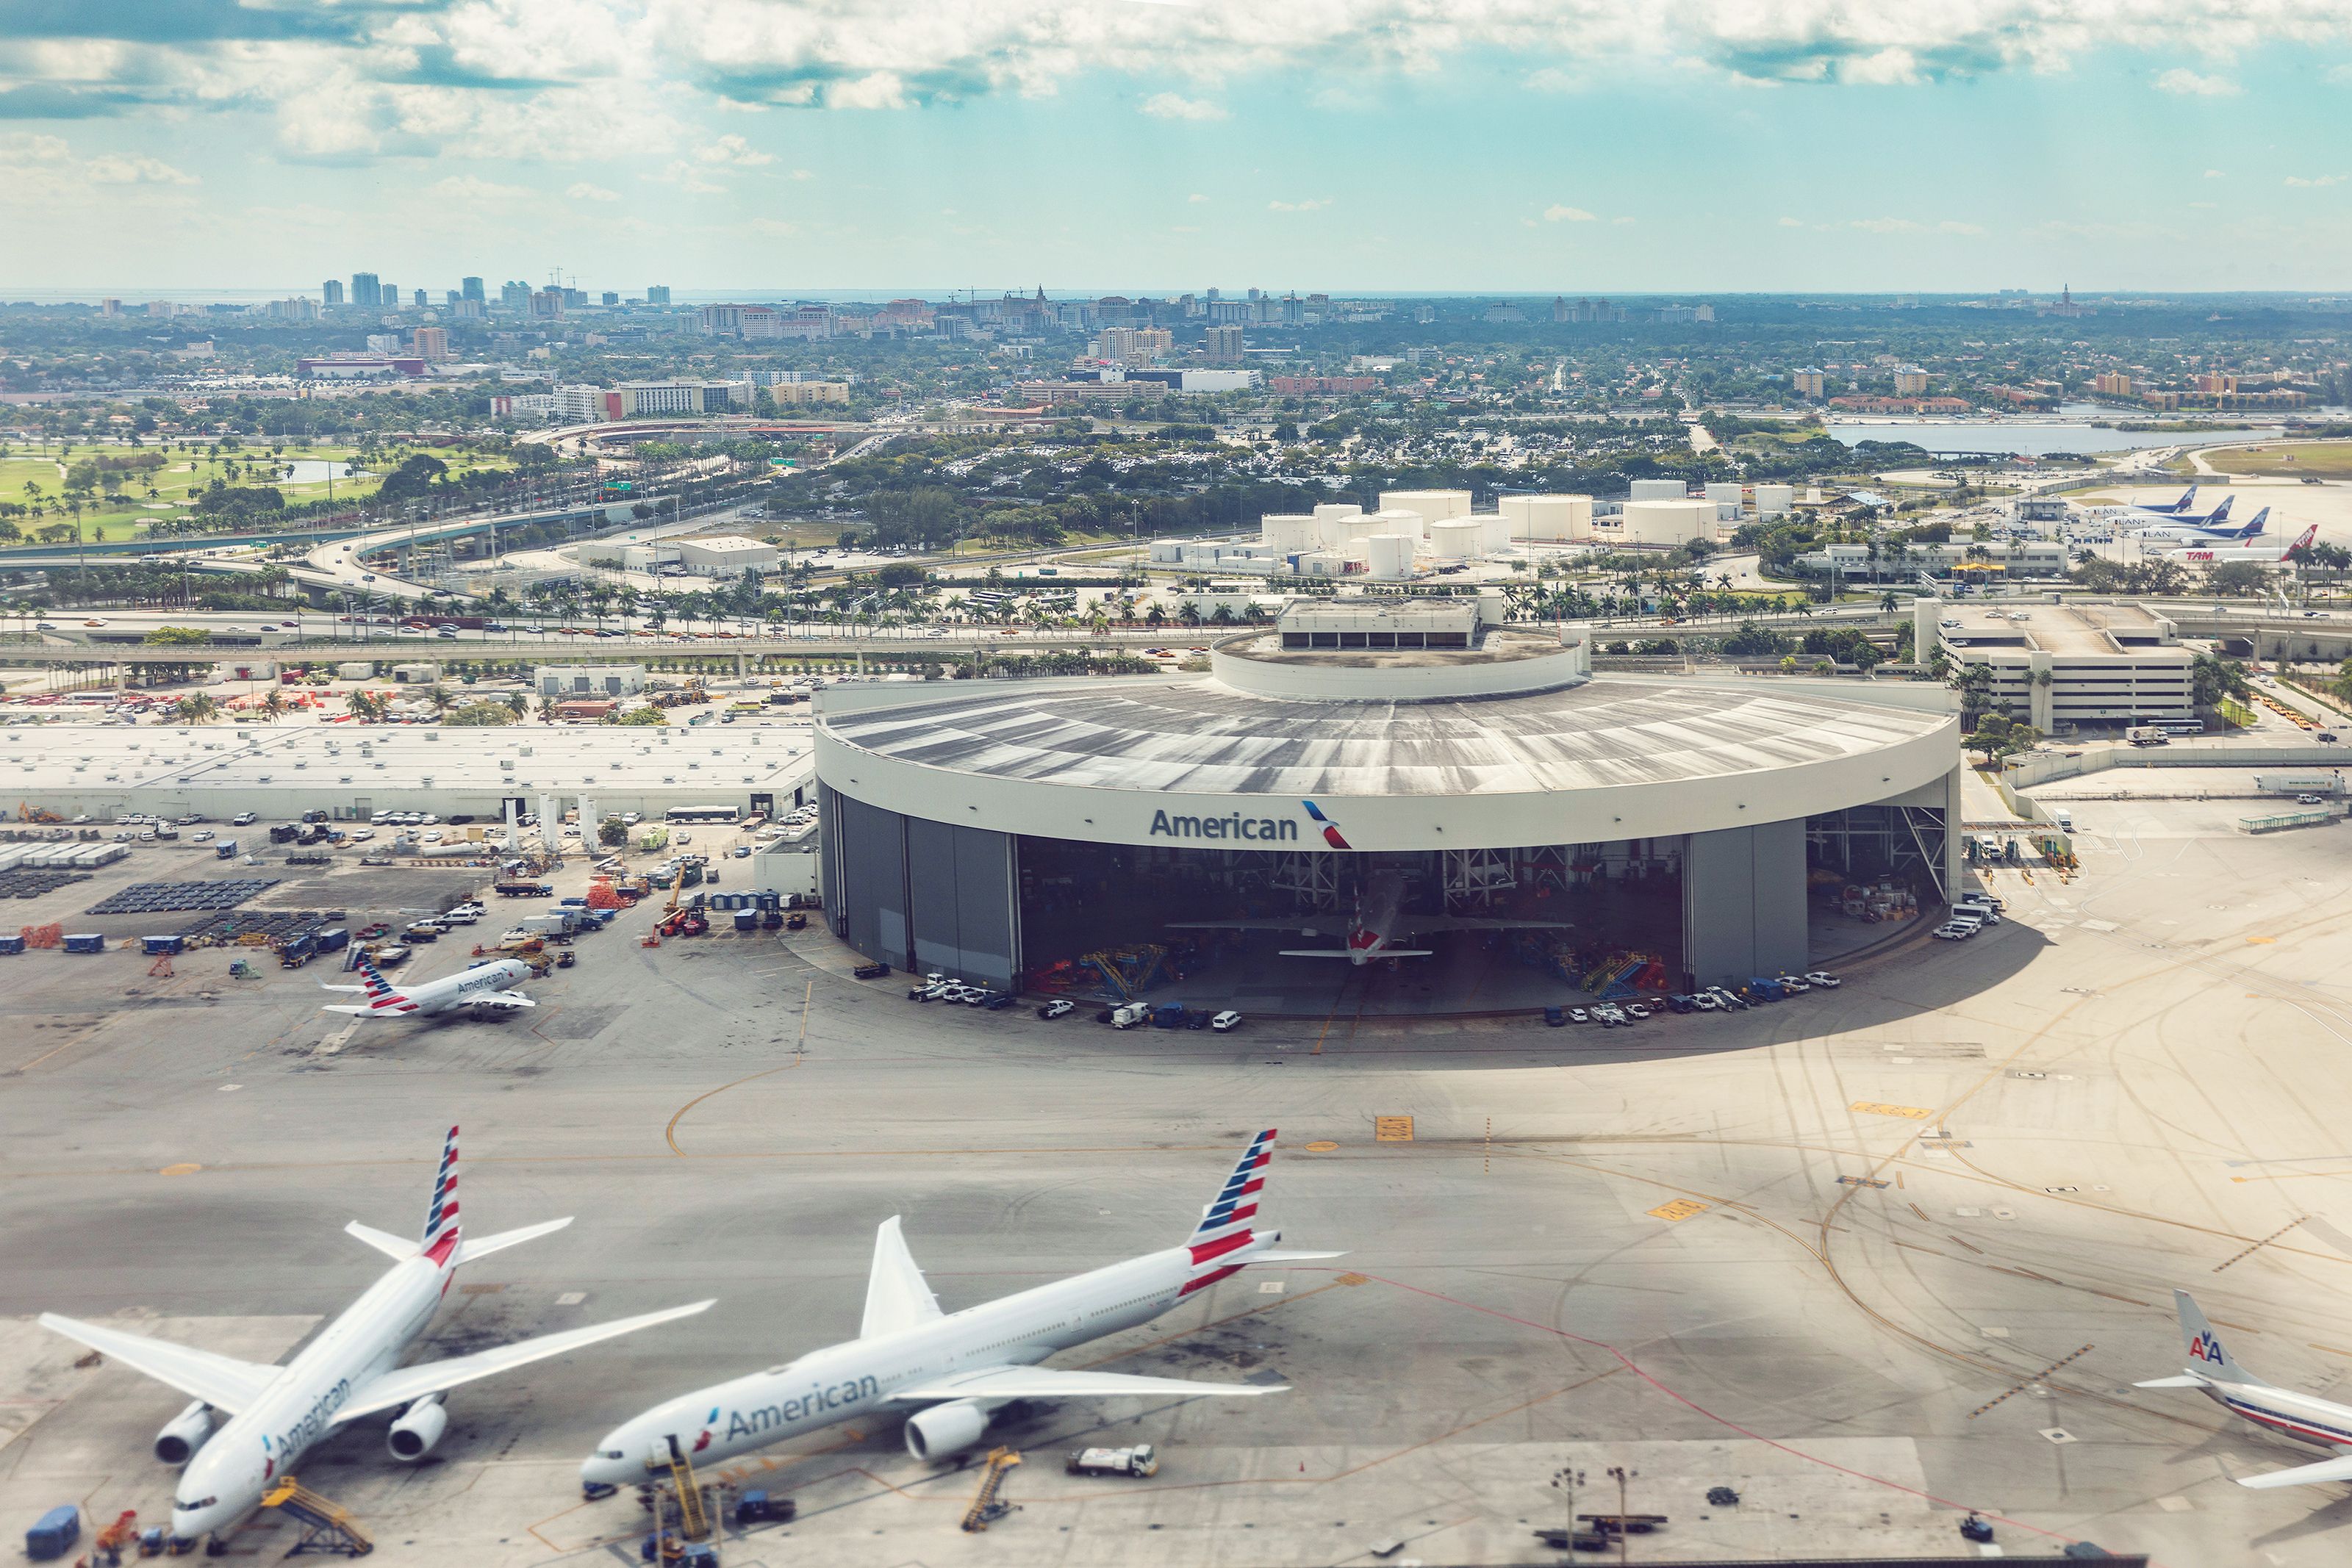 American Airlines Planes & Hangar In Miami